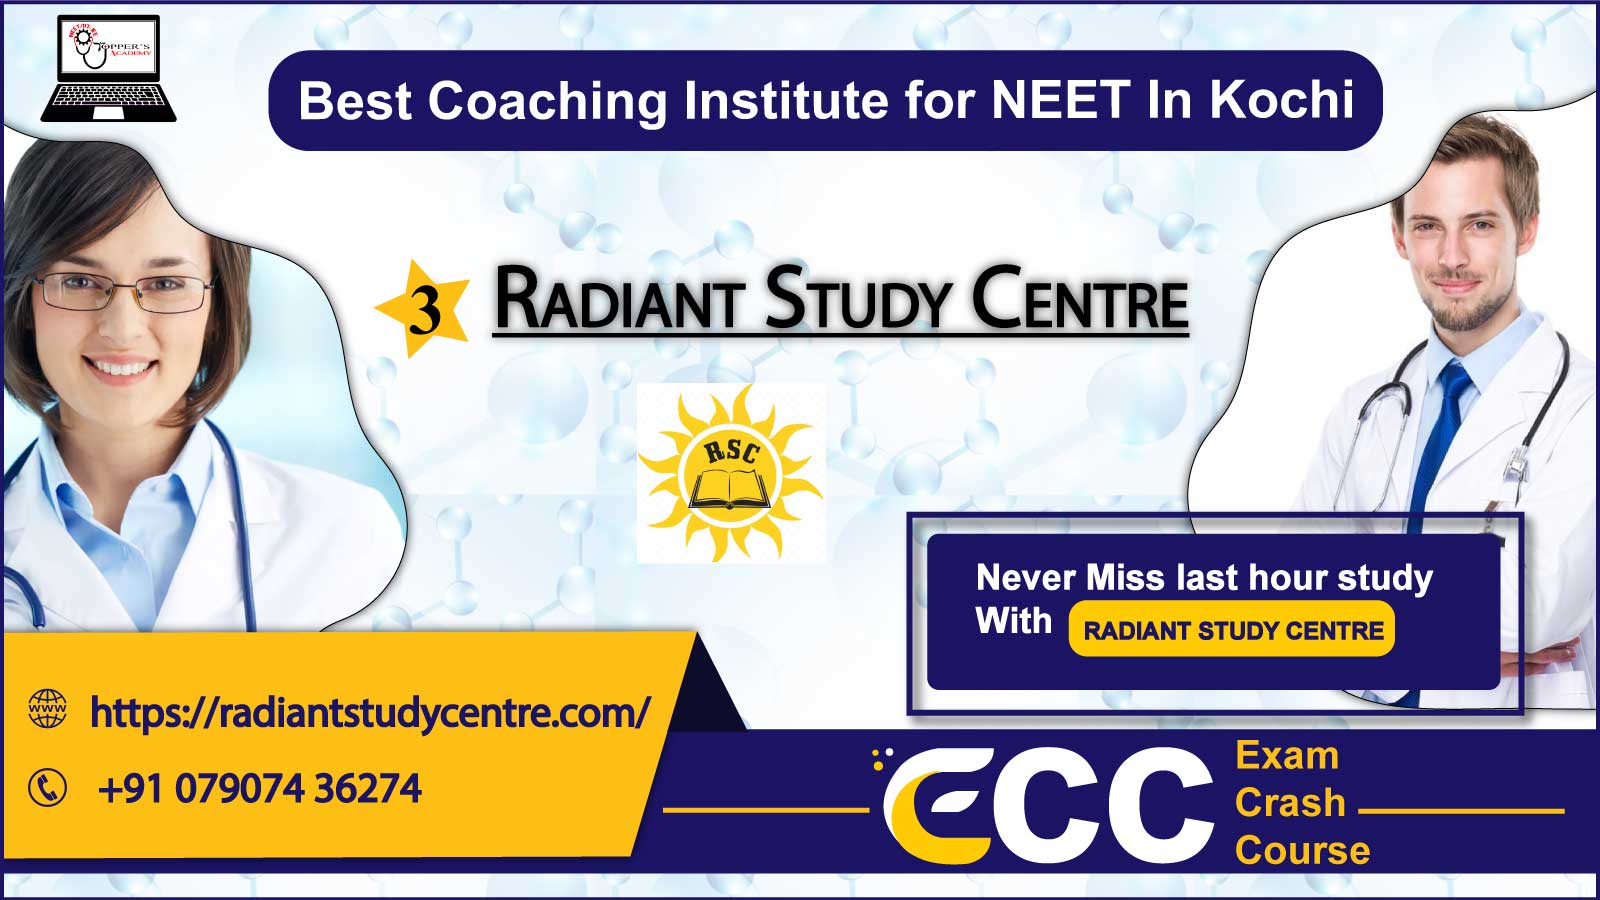 Radiant Study Centre NEET Coaching in Kochi